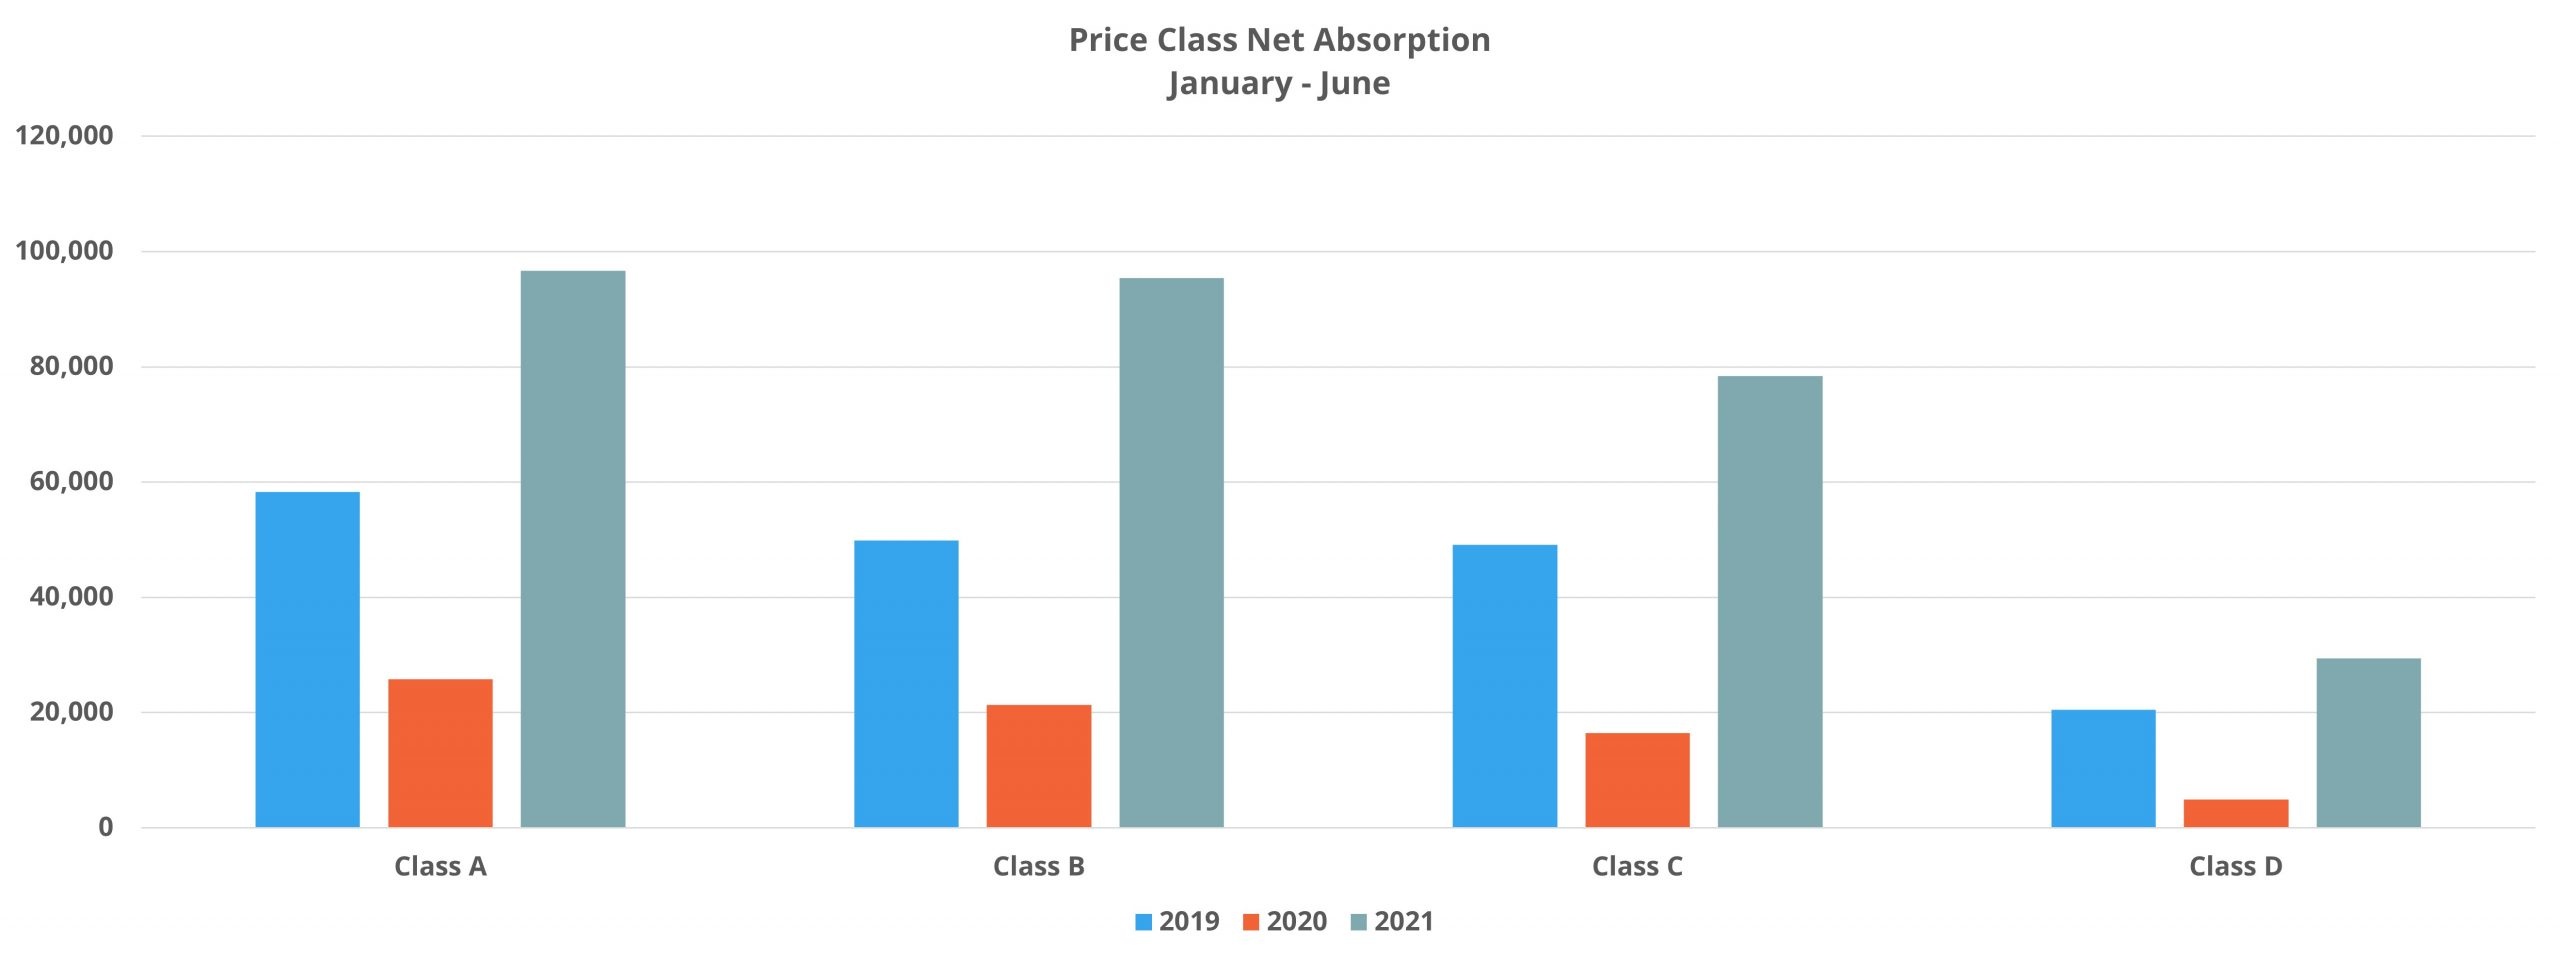 Price Class Net Absorption